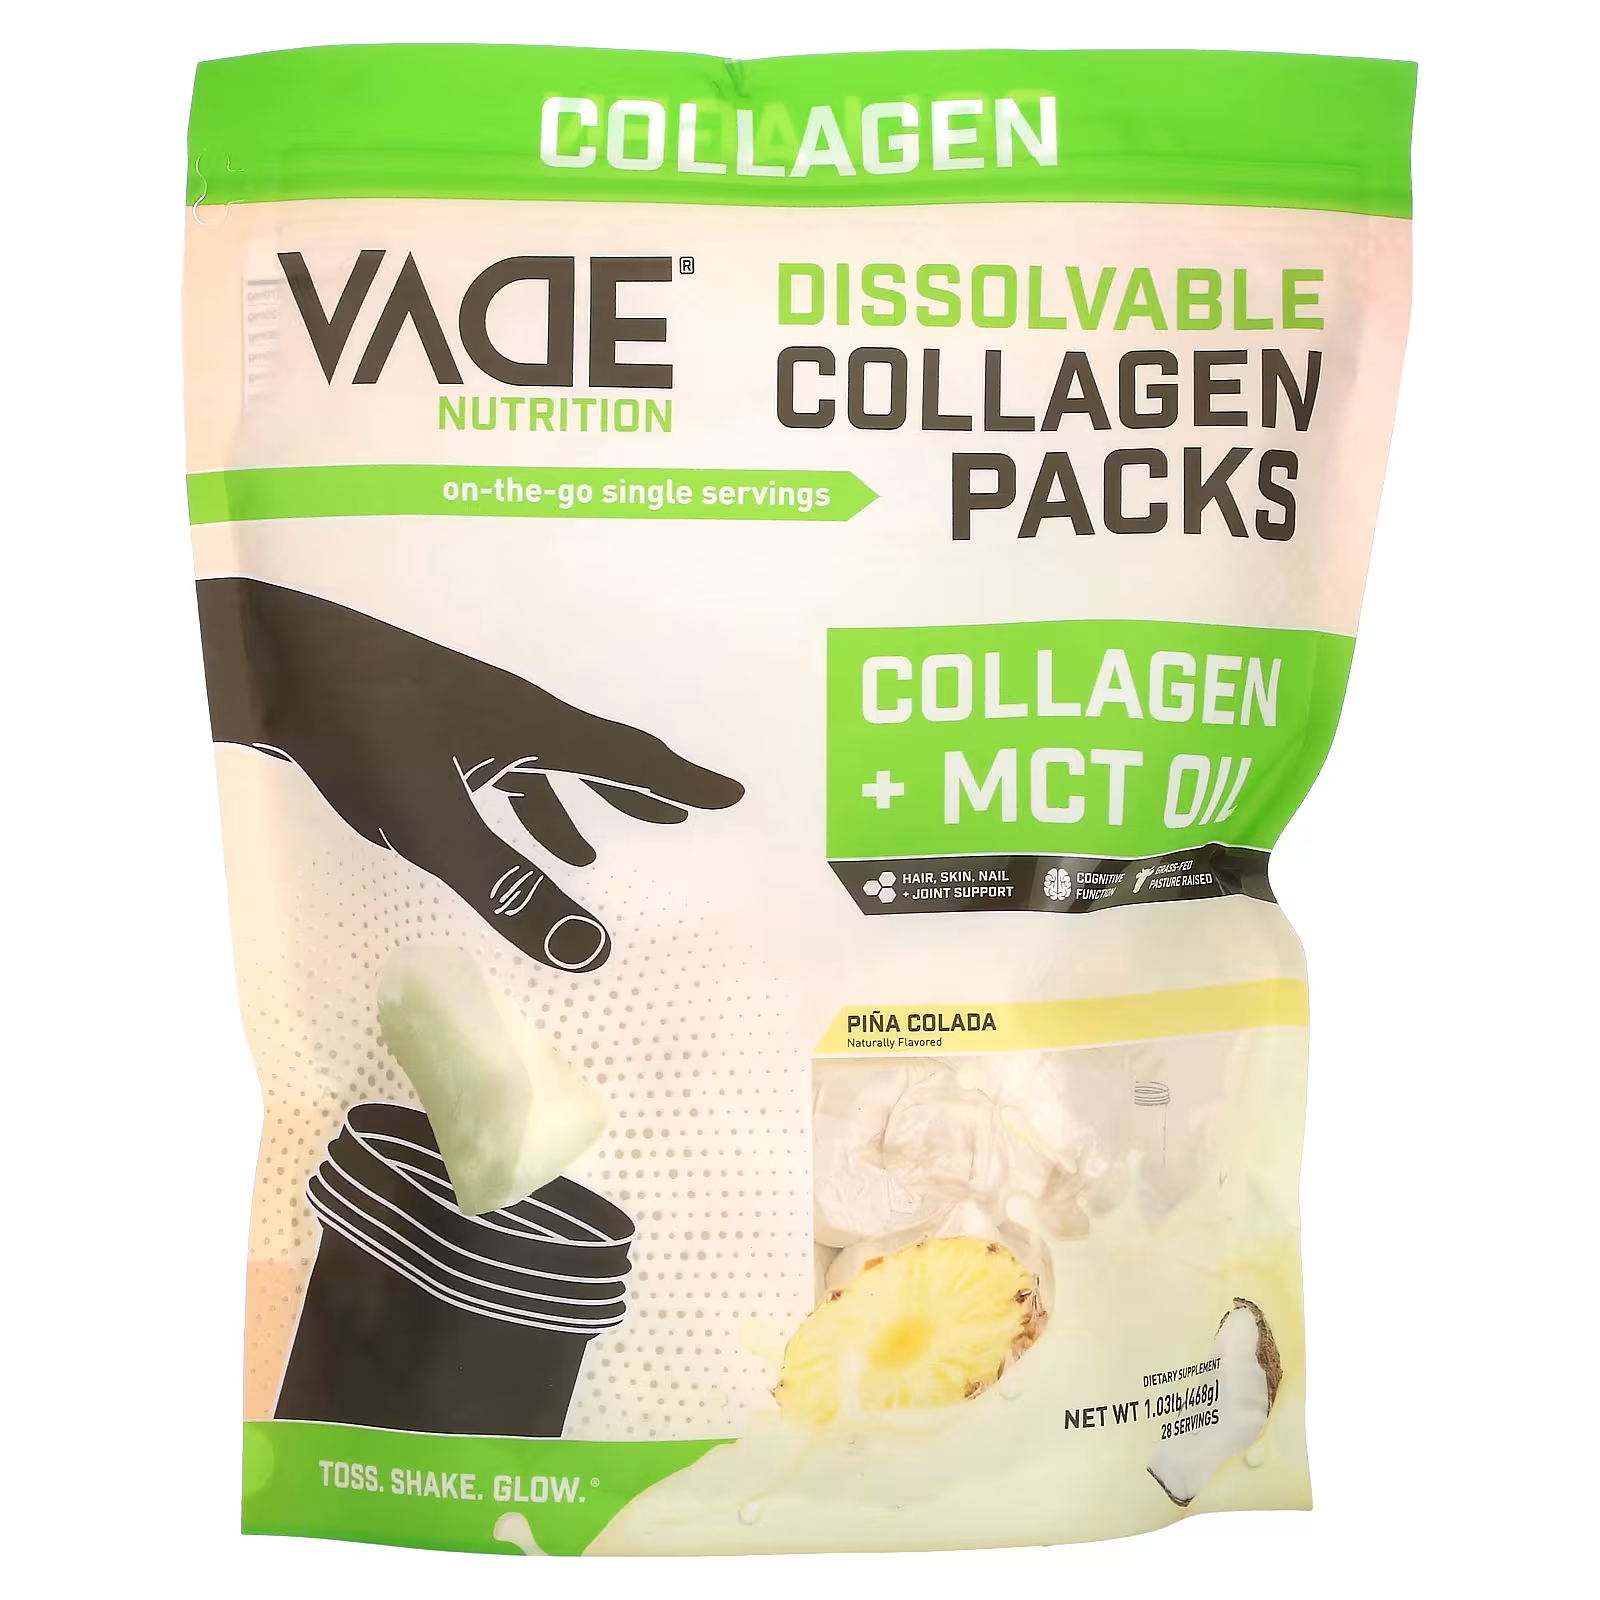 Коллаген + масло MCT Vade Nutrition Dissolvable Collagen Packs со вкусом пина колады, 468 г конфеты нуга молочные с фр со вкусом пина колады 180г